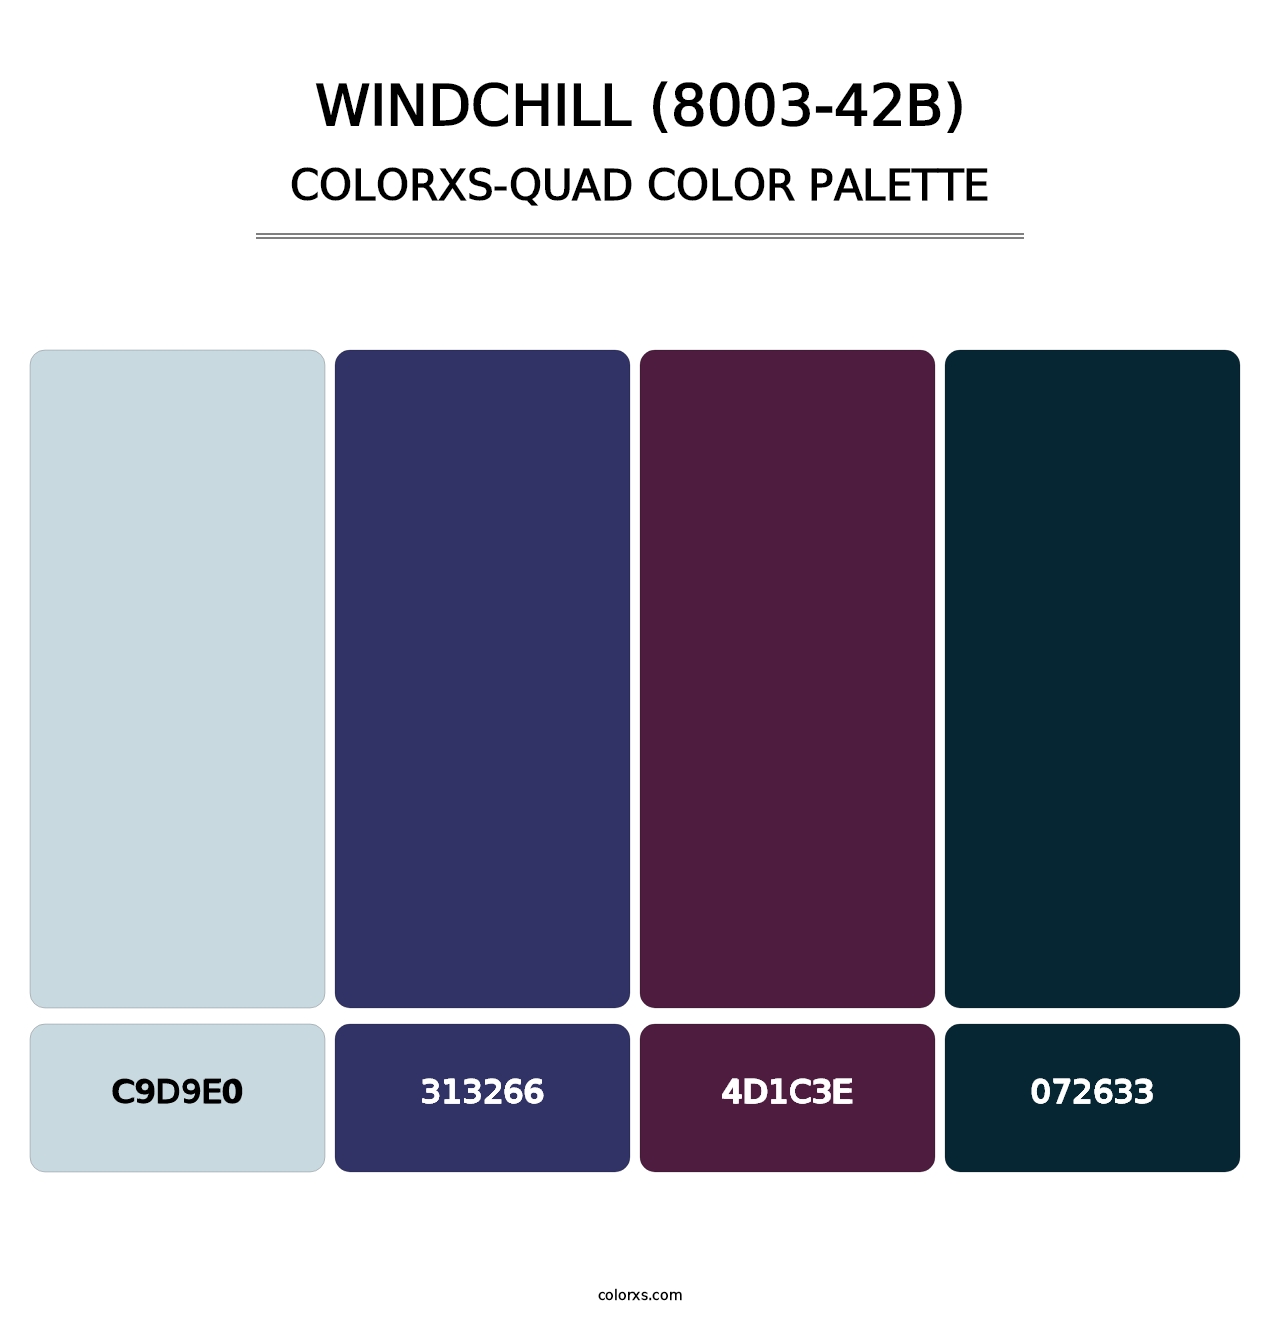 Windchill (8003-42B) - Colorxs Quad Palette